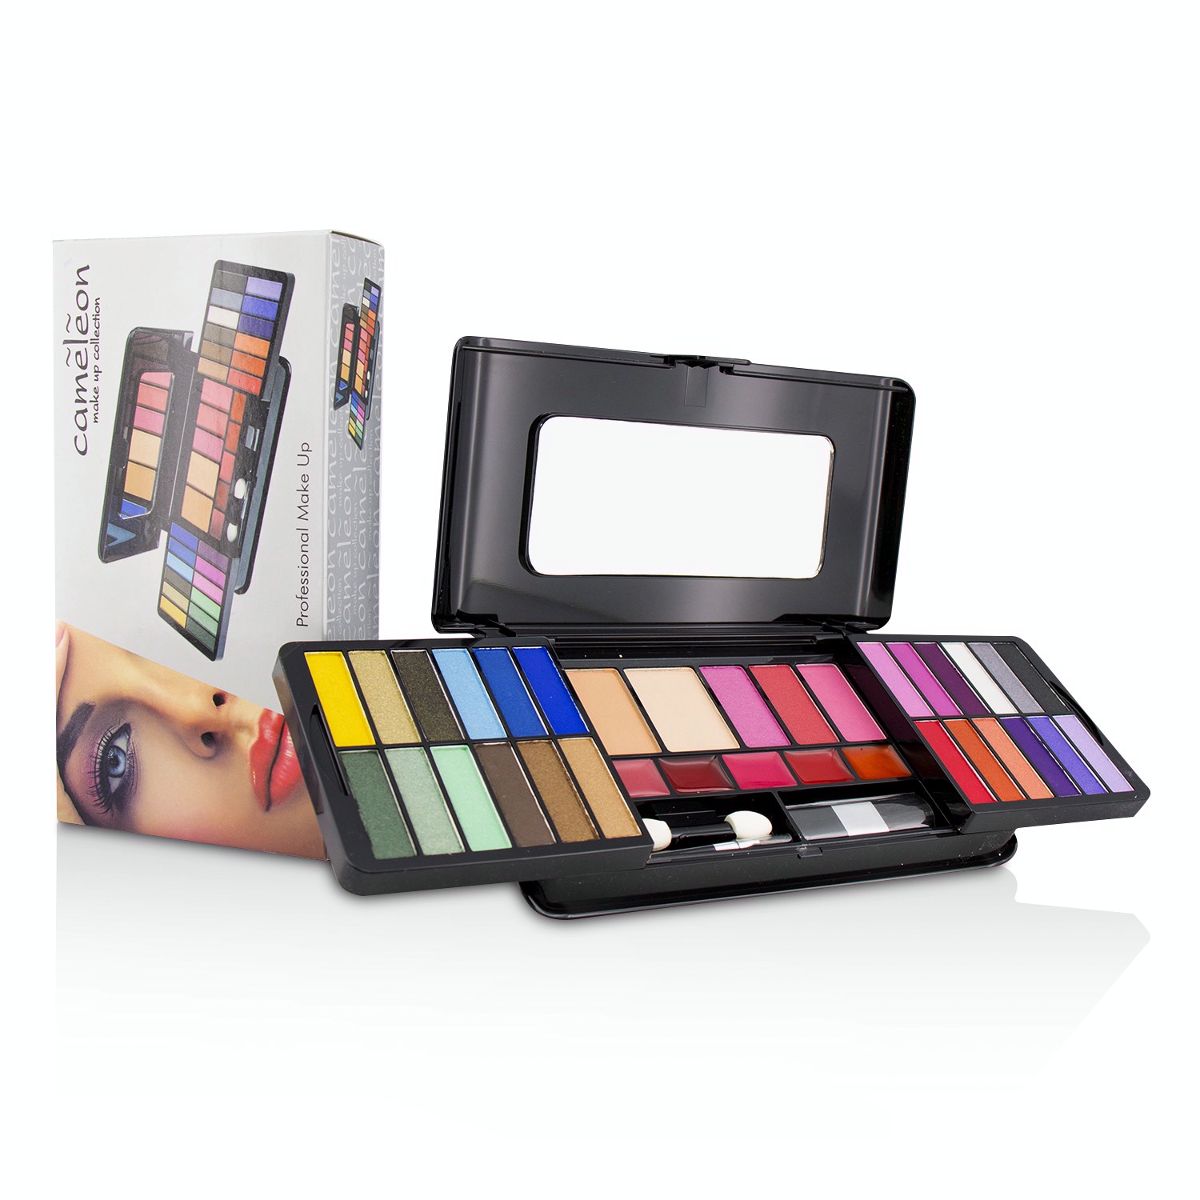 MakeUp Kit Deluxe G2215 (24x Eyeshadow 3x Blusher 2x Pressed Powder 5x Lipgloss 2x Applicator) Cameleon Image